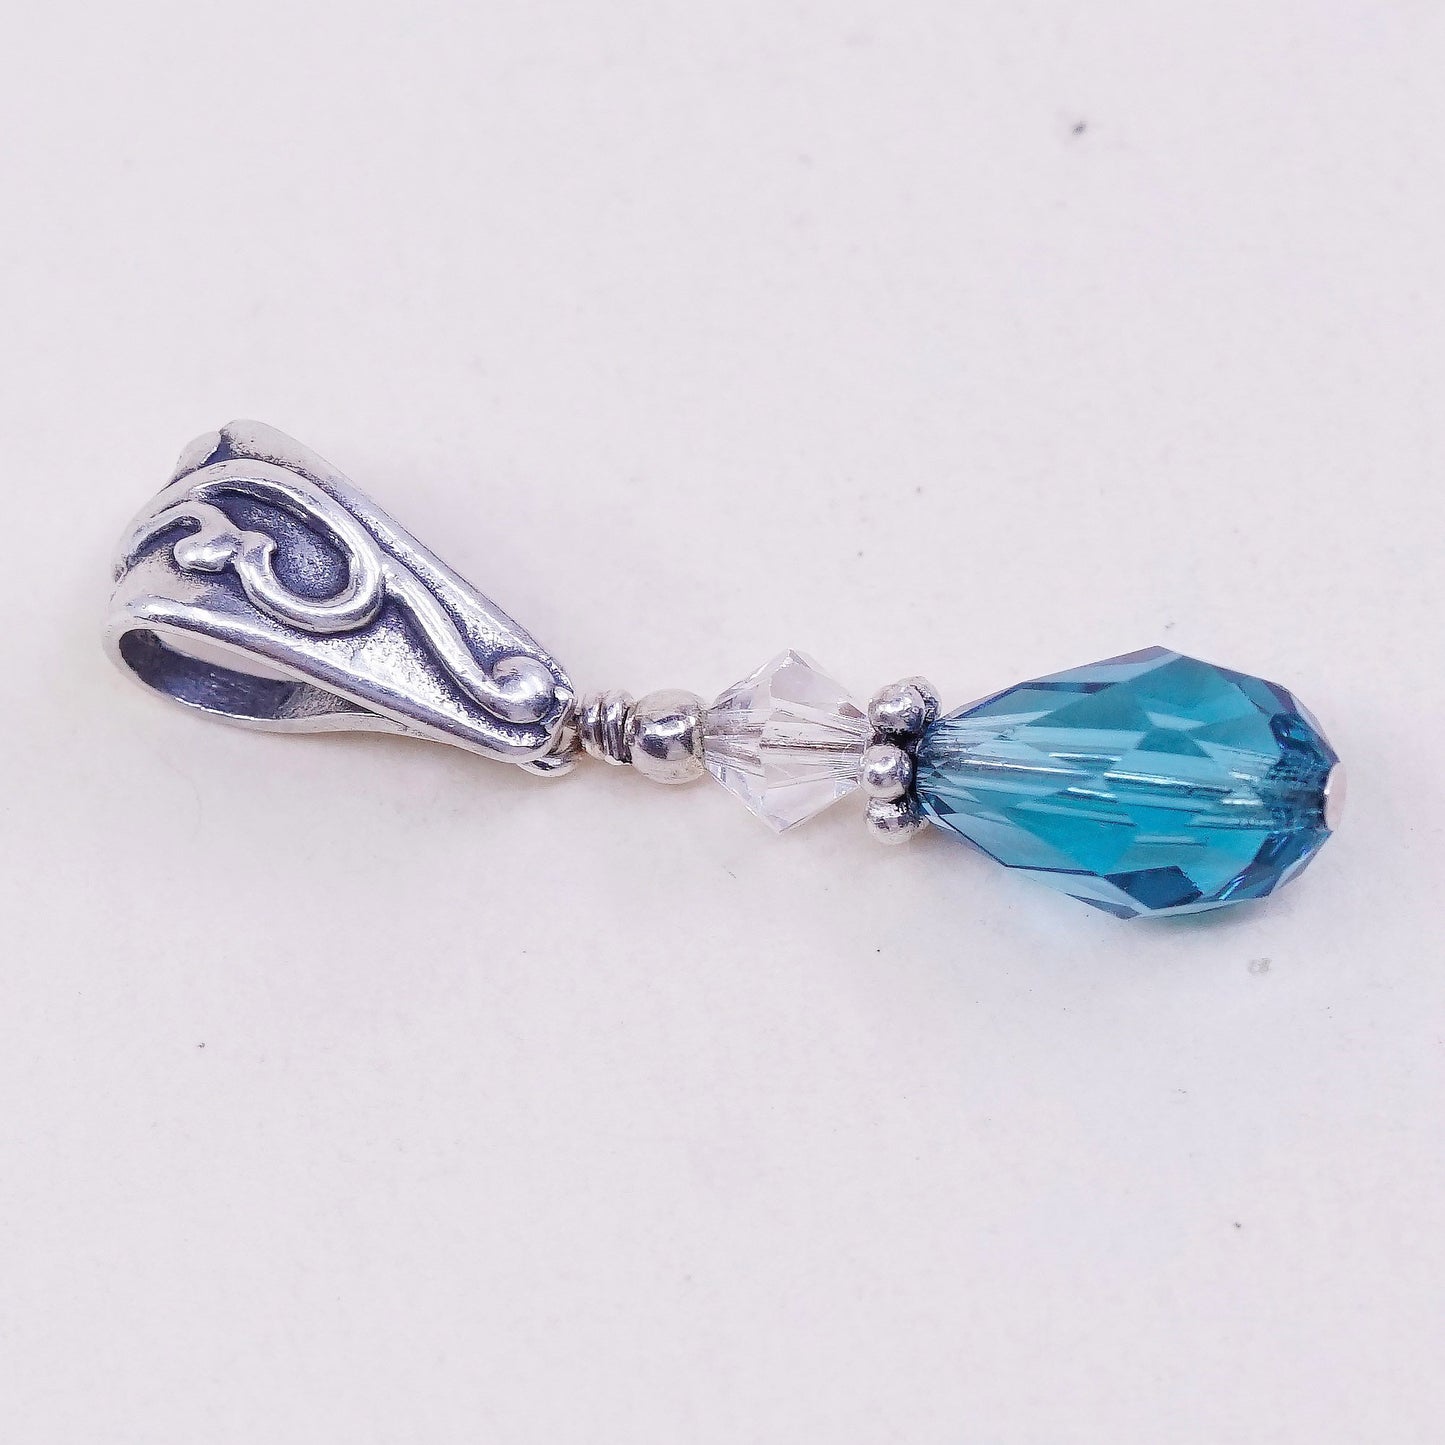 VTG Sterling silver handmade pendant, 925 with teardrop shaped blue crystal